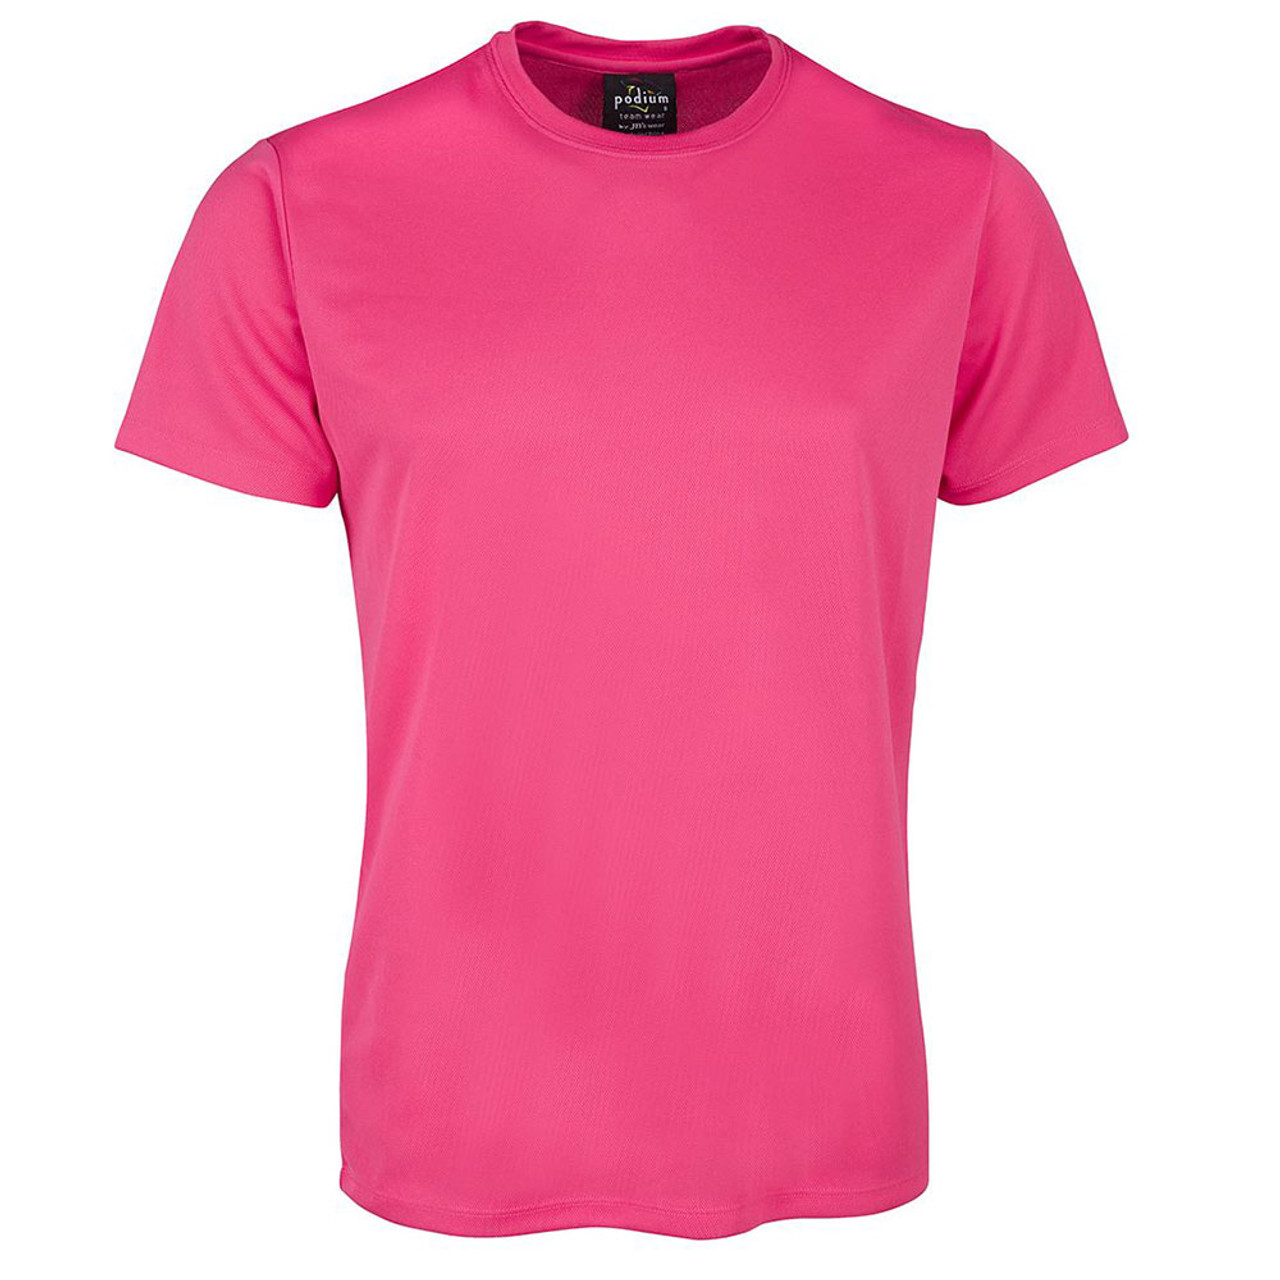 plain pink t shirt back